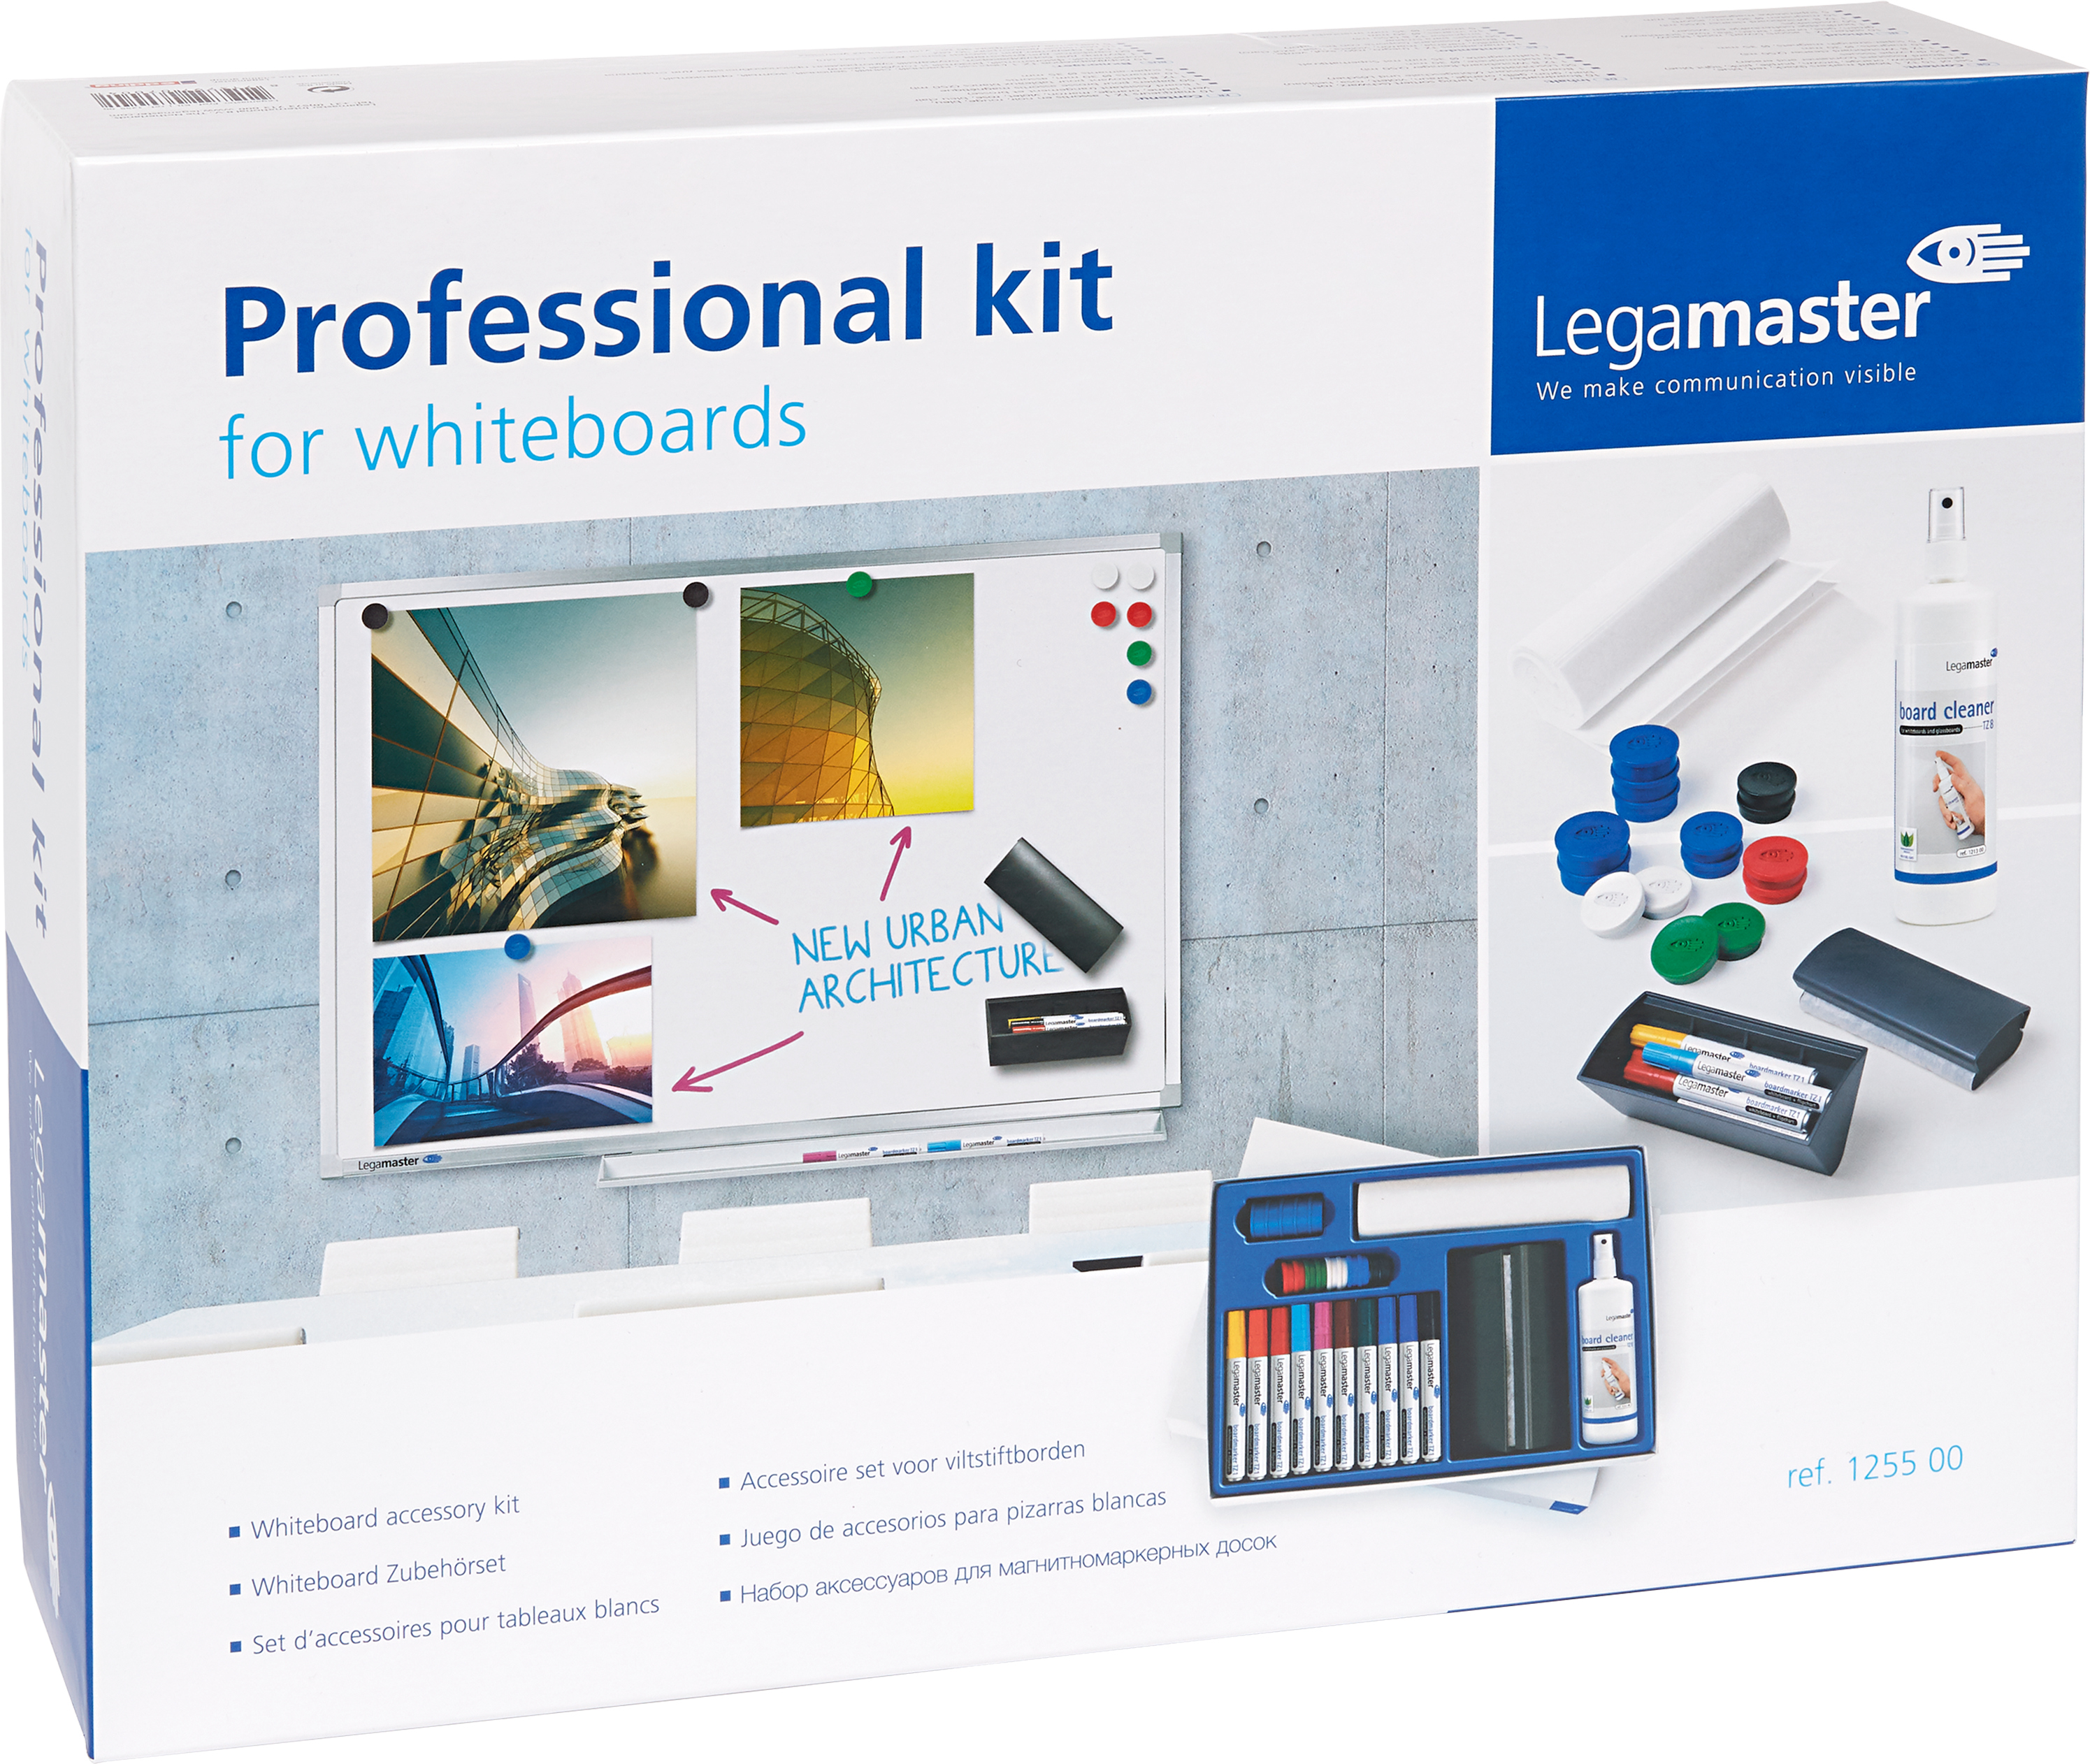 LEGAMASTER Professional Kit 7-125500 p. Whiteboards